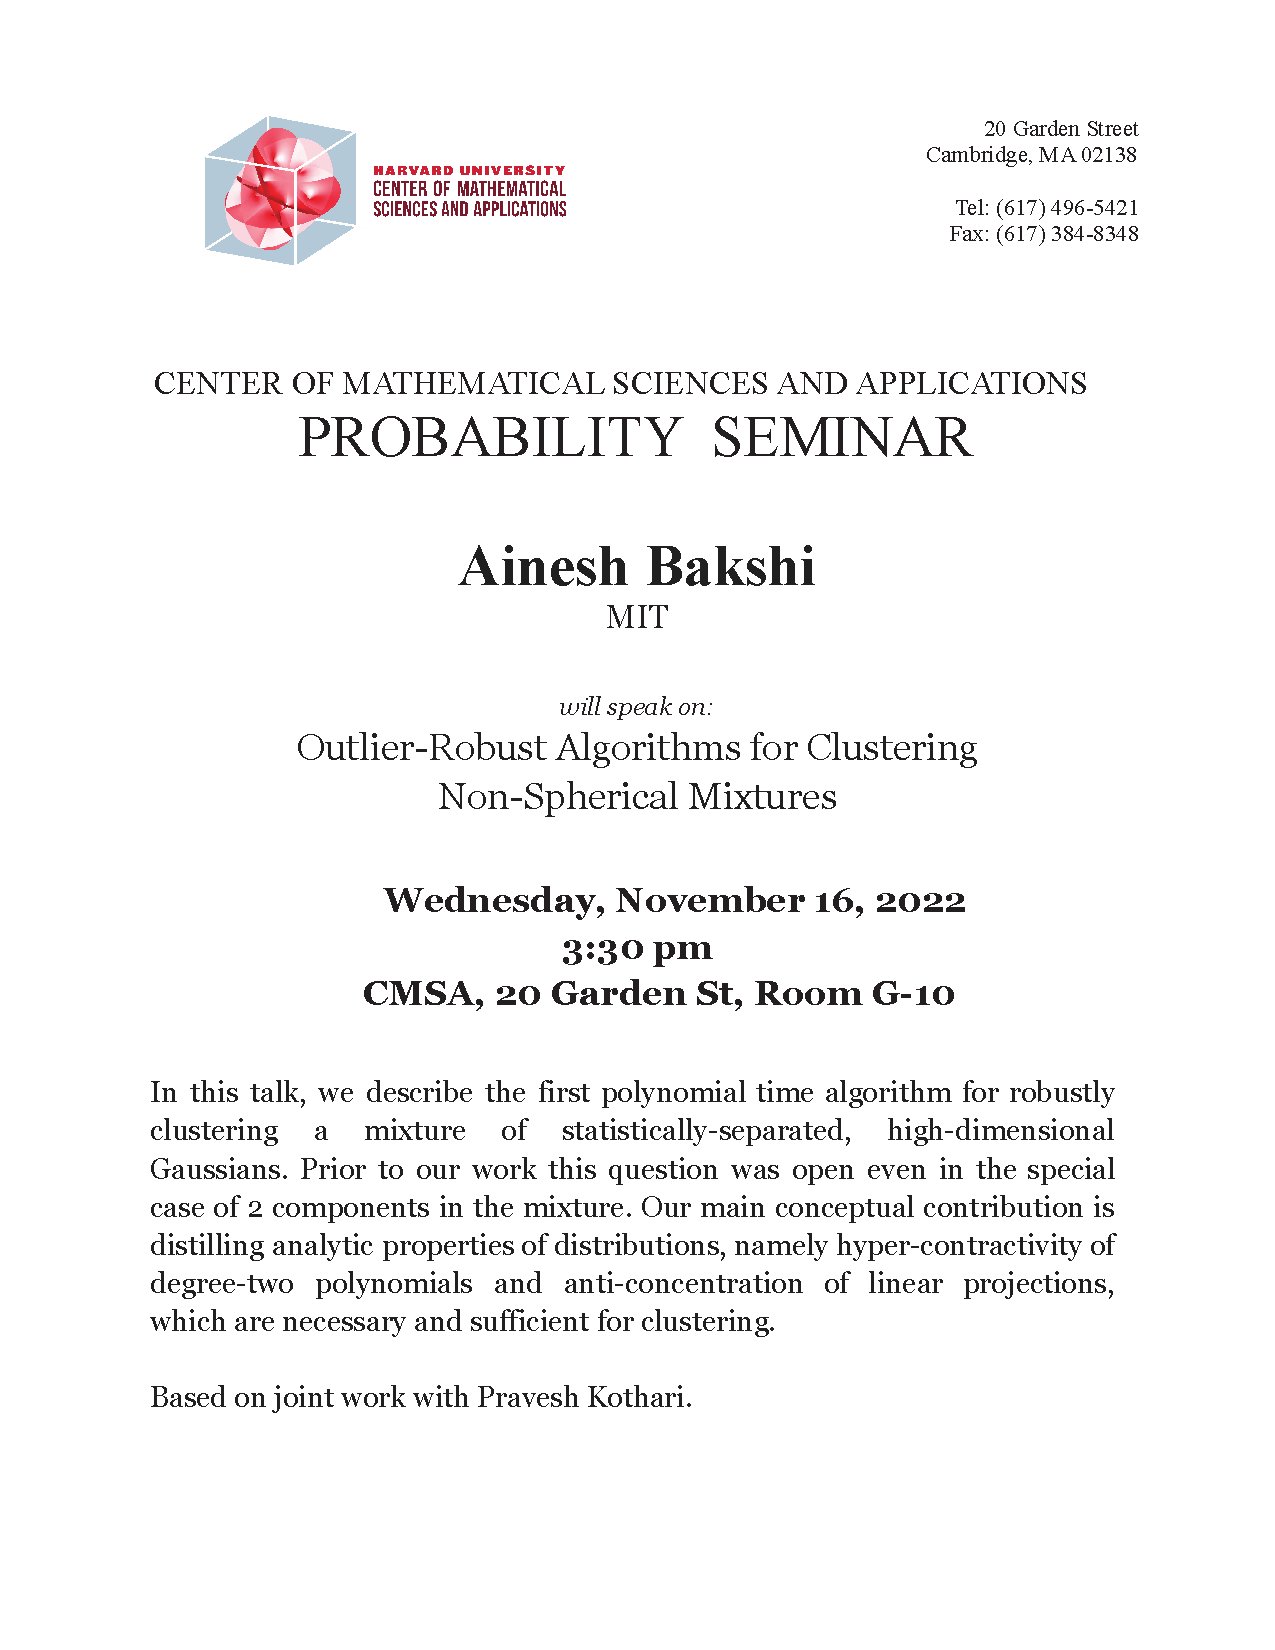 CMSA Probability Seminar 11.16.22